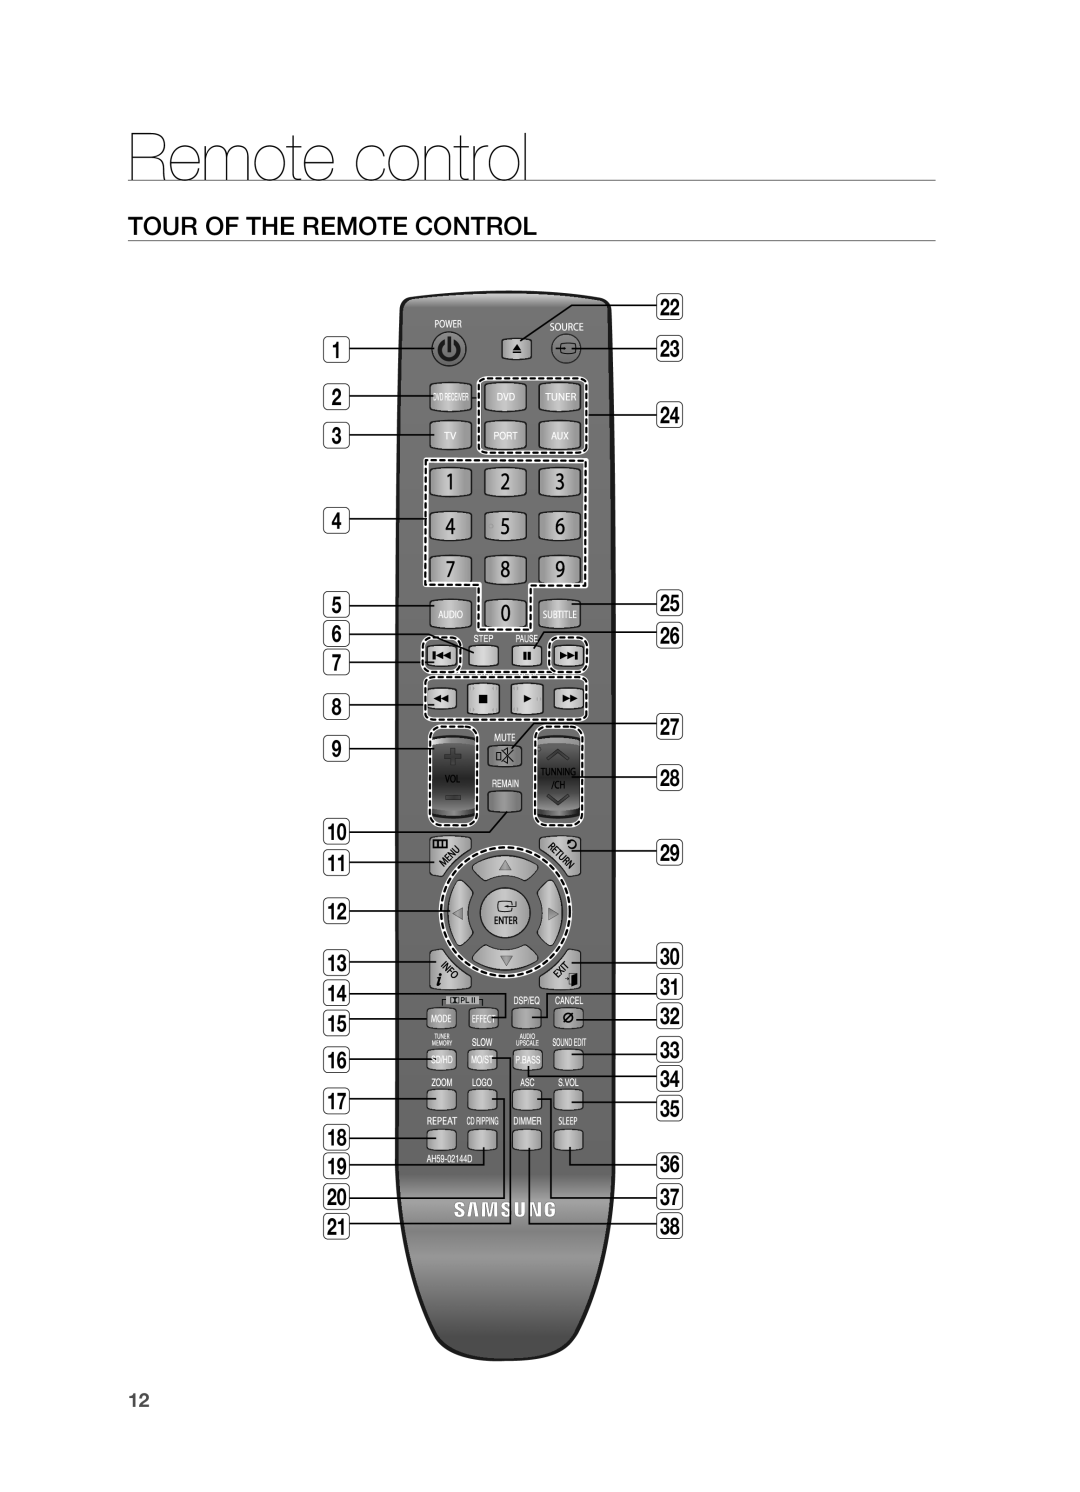 Samsung HT-X725 Remote control, Tour of the Remote Control, 1 2 3 4 5 6 7 8 9, 23 24 25 26 27 28, 10 11 12 13 14 15 